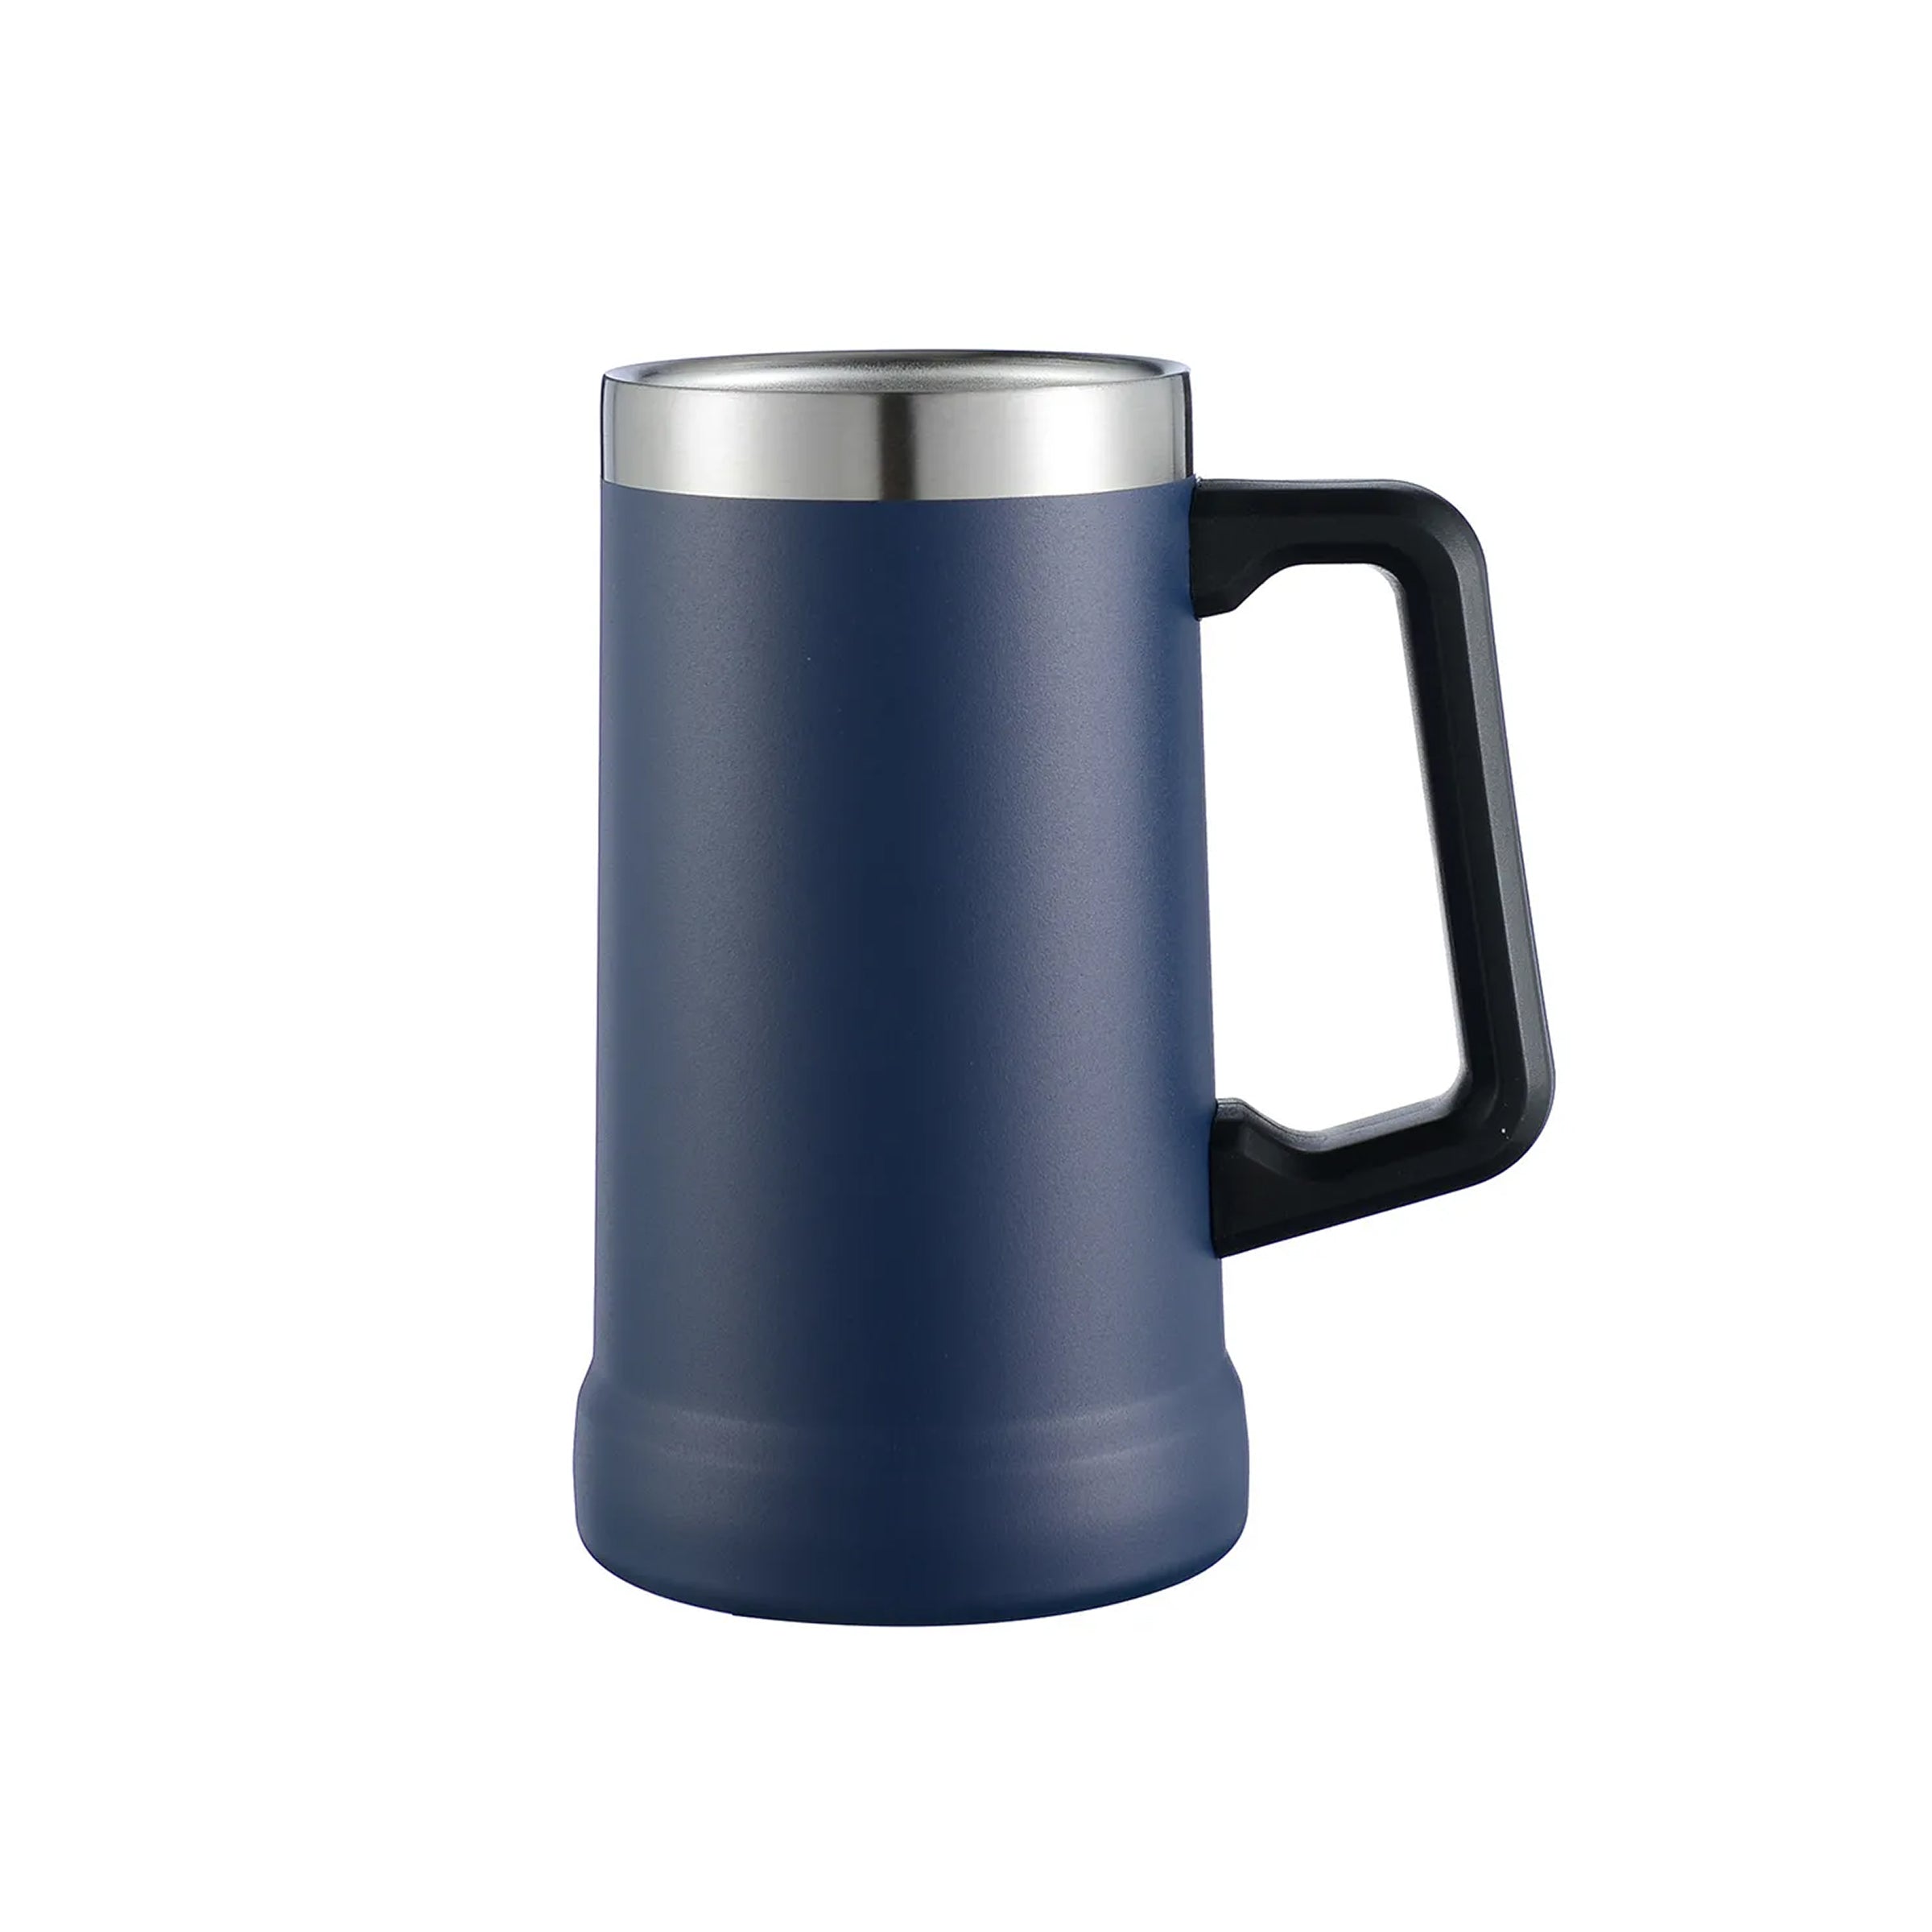 Engraved 17oz Stainless Steel Barrel Mug Personalized Beer Mug